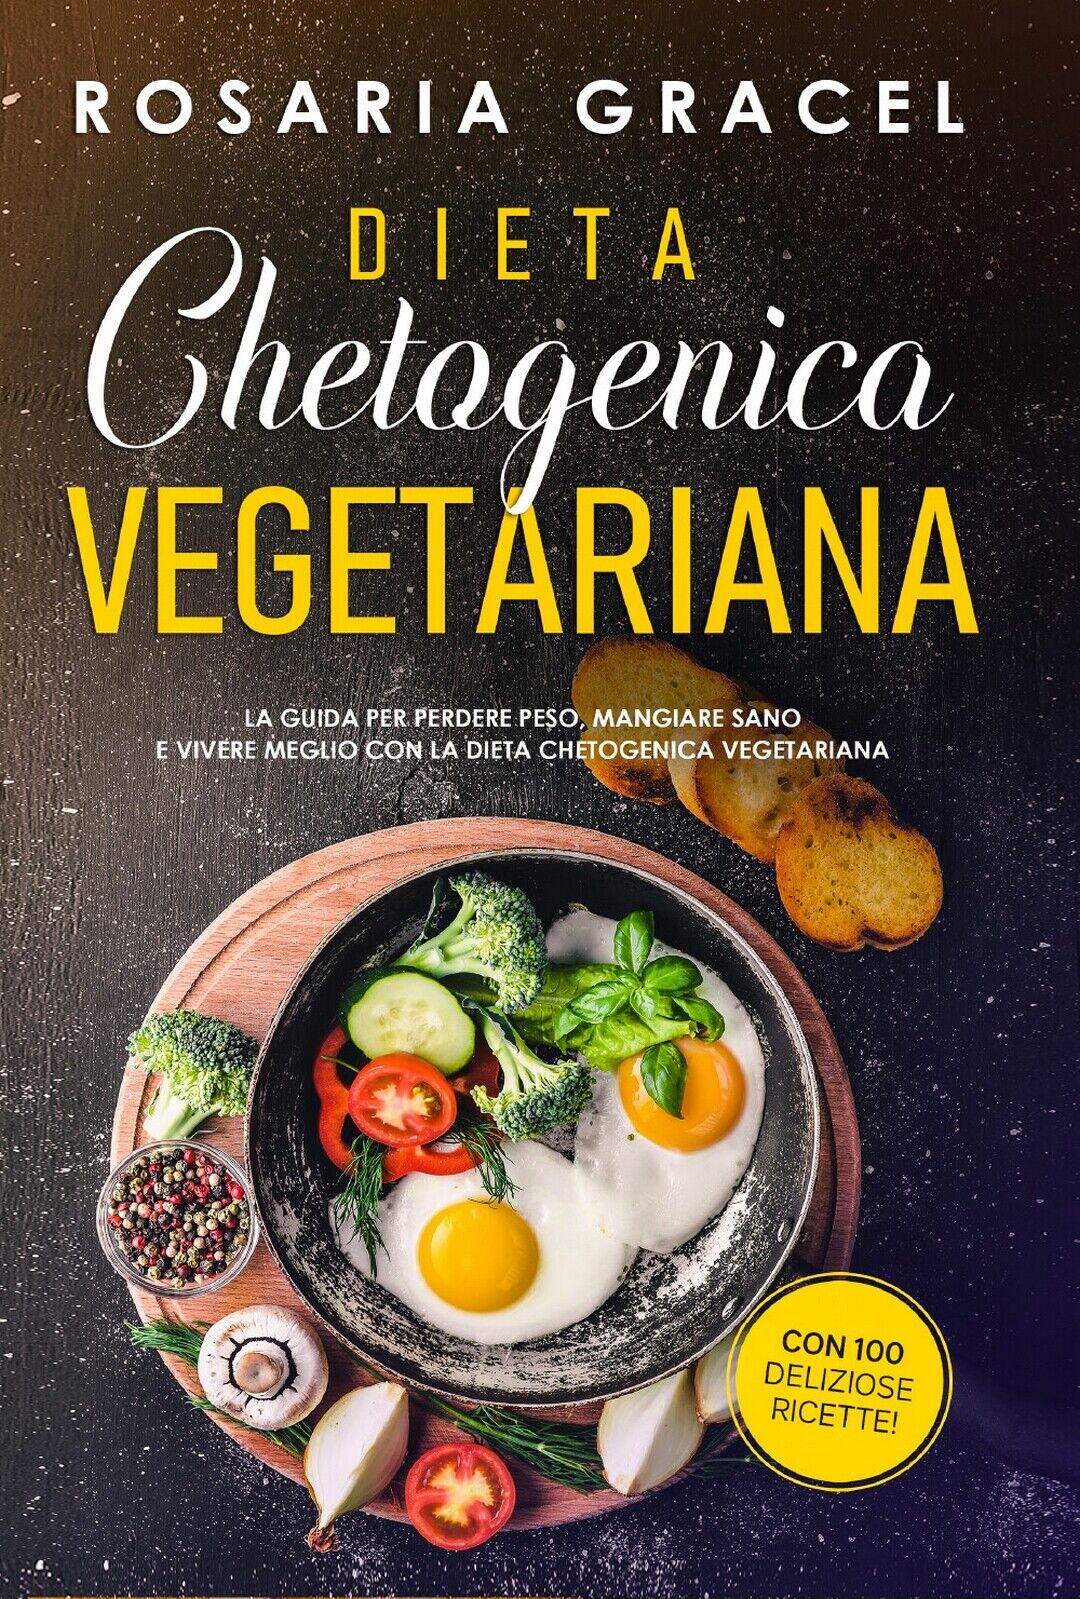 Dieta Chetogenica Vegetariana di Rosaria Gracel (Youcanprint 2021 )